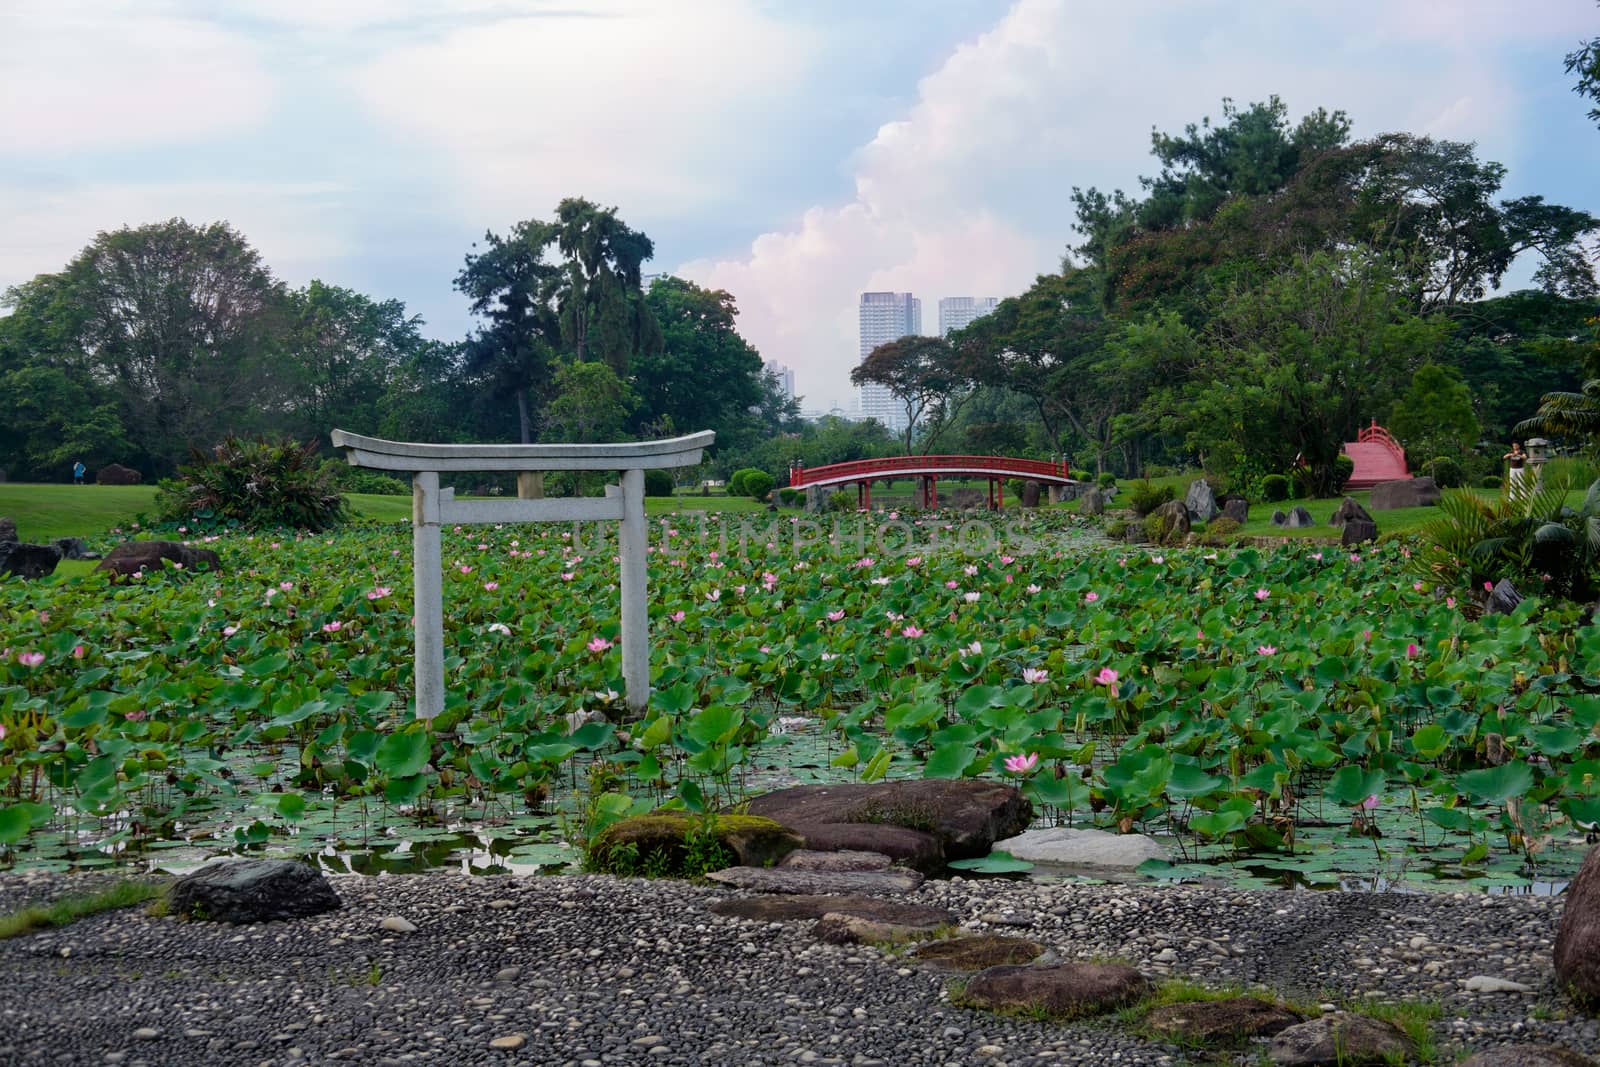 Pond of lotuses in japanese garden. Singapore by rainfallsup